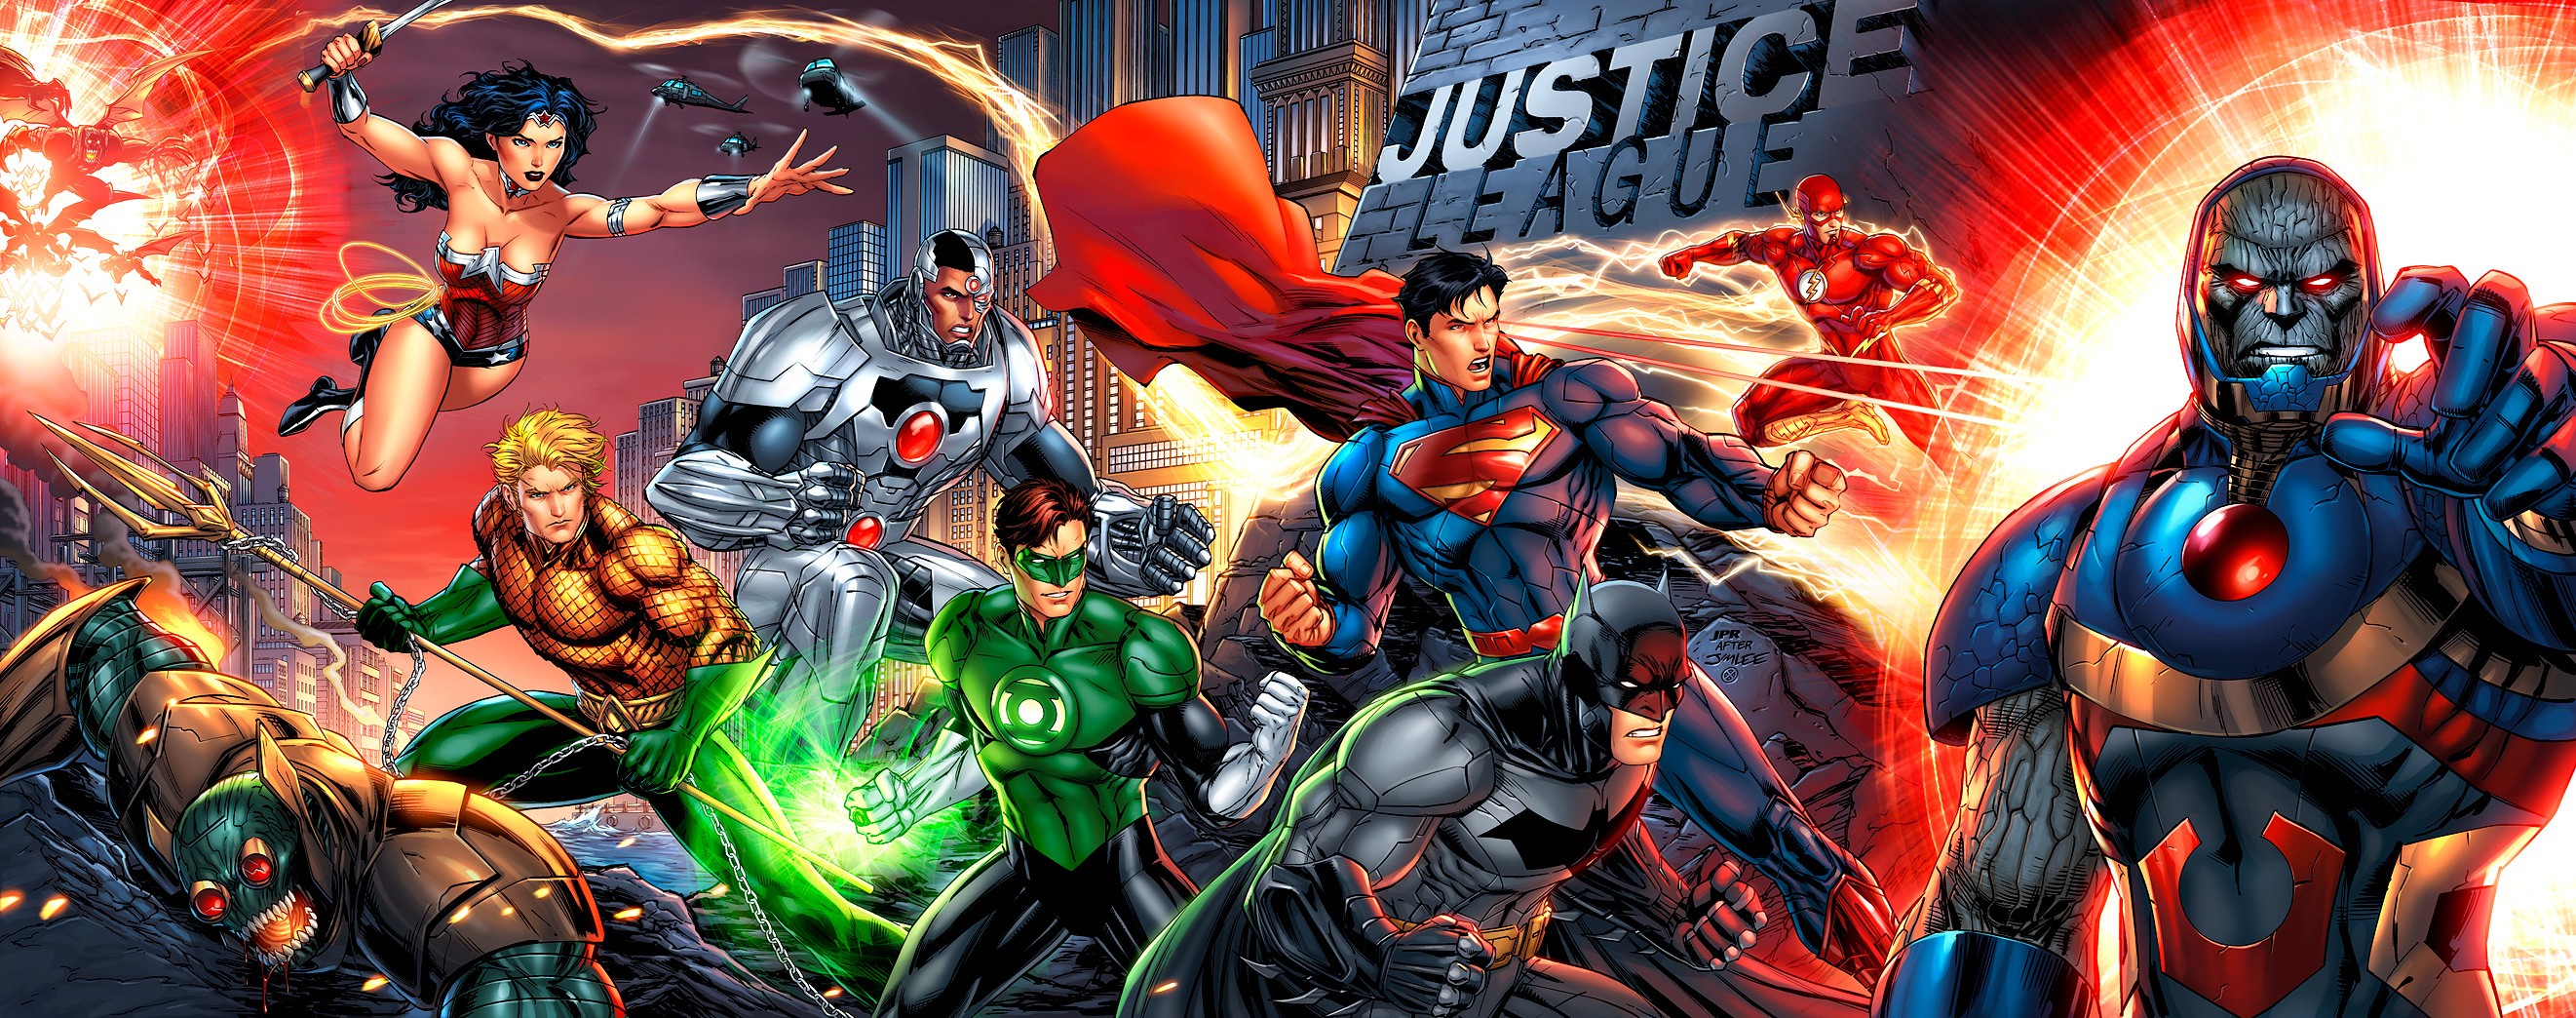 Superman Composite Superman Batman DC Comics Justice League Green Lantern Flash Wonder Woman Aquaman 2643x1044